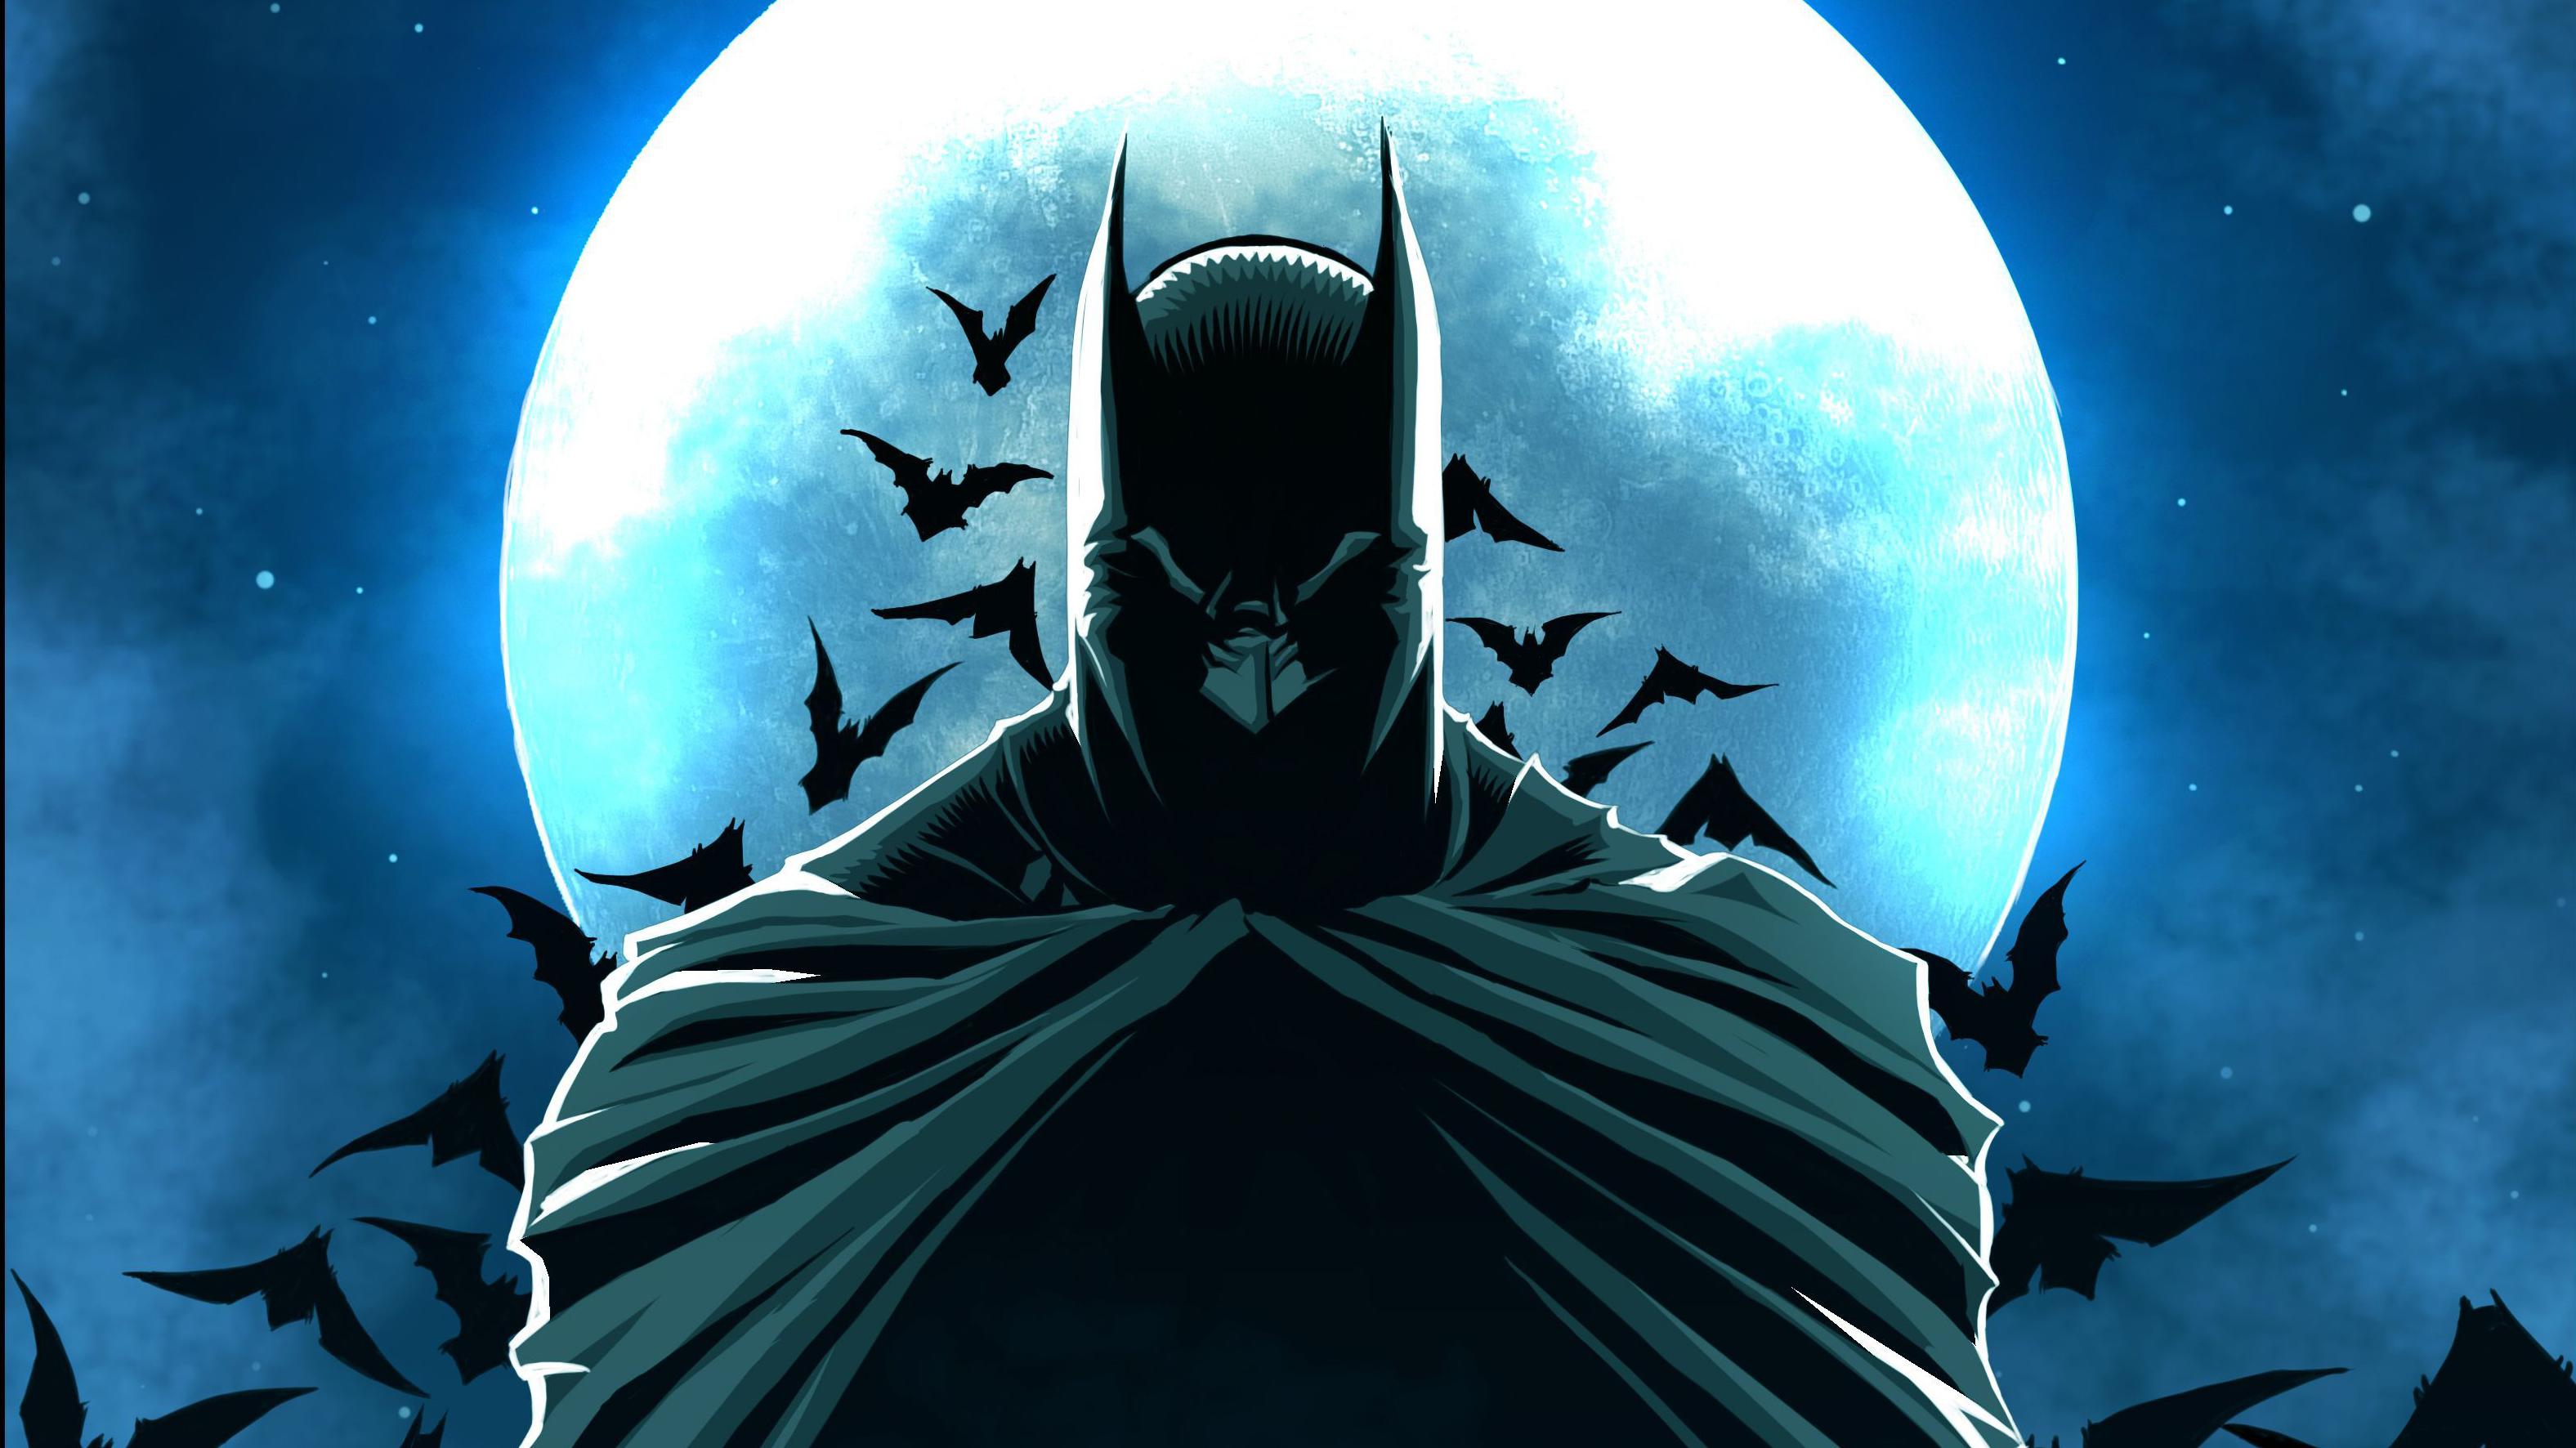 Free download Batman 4K wallpapers for your desktop or mobile screen